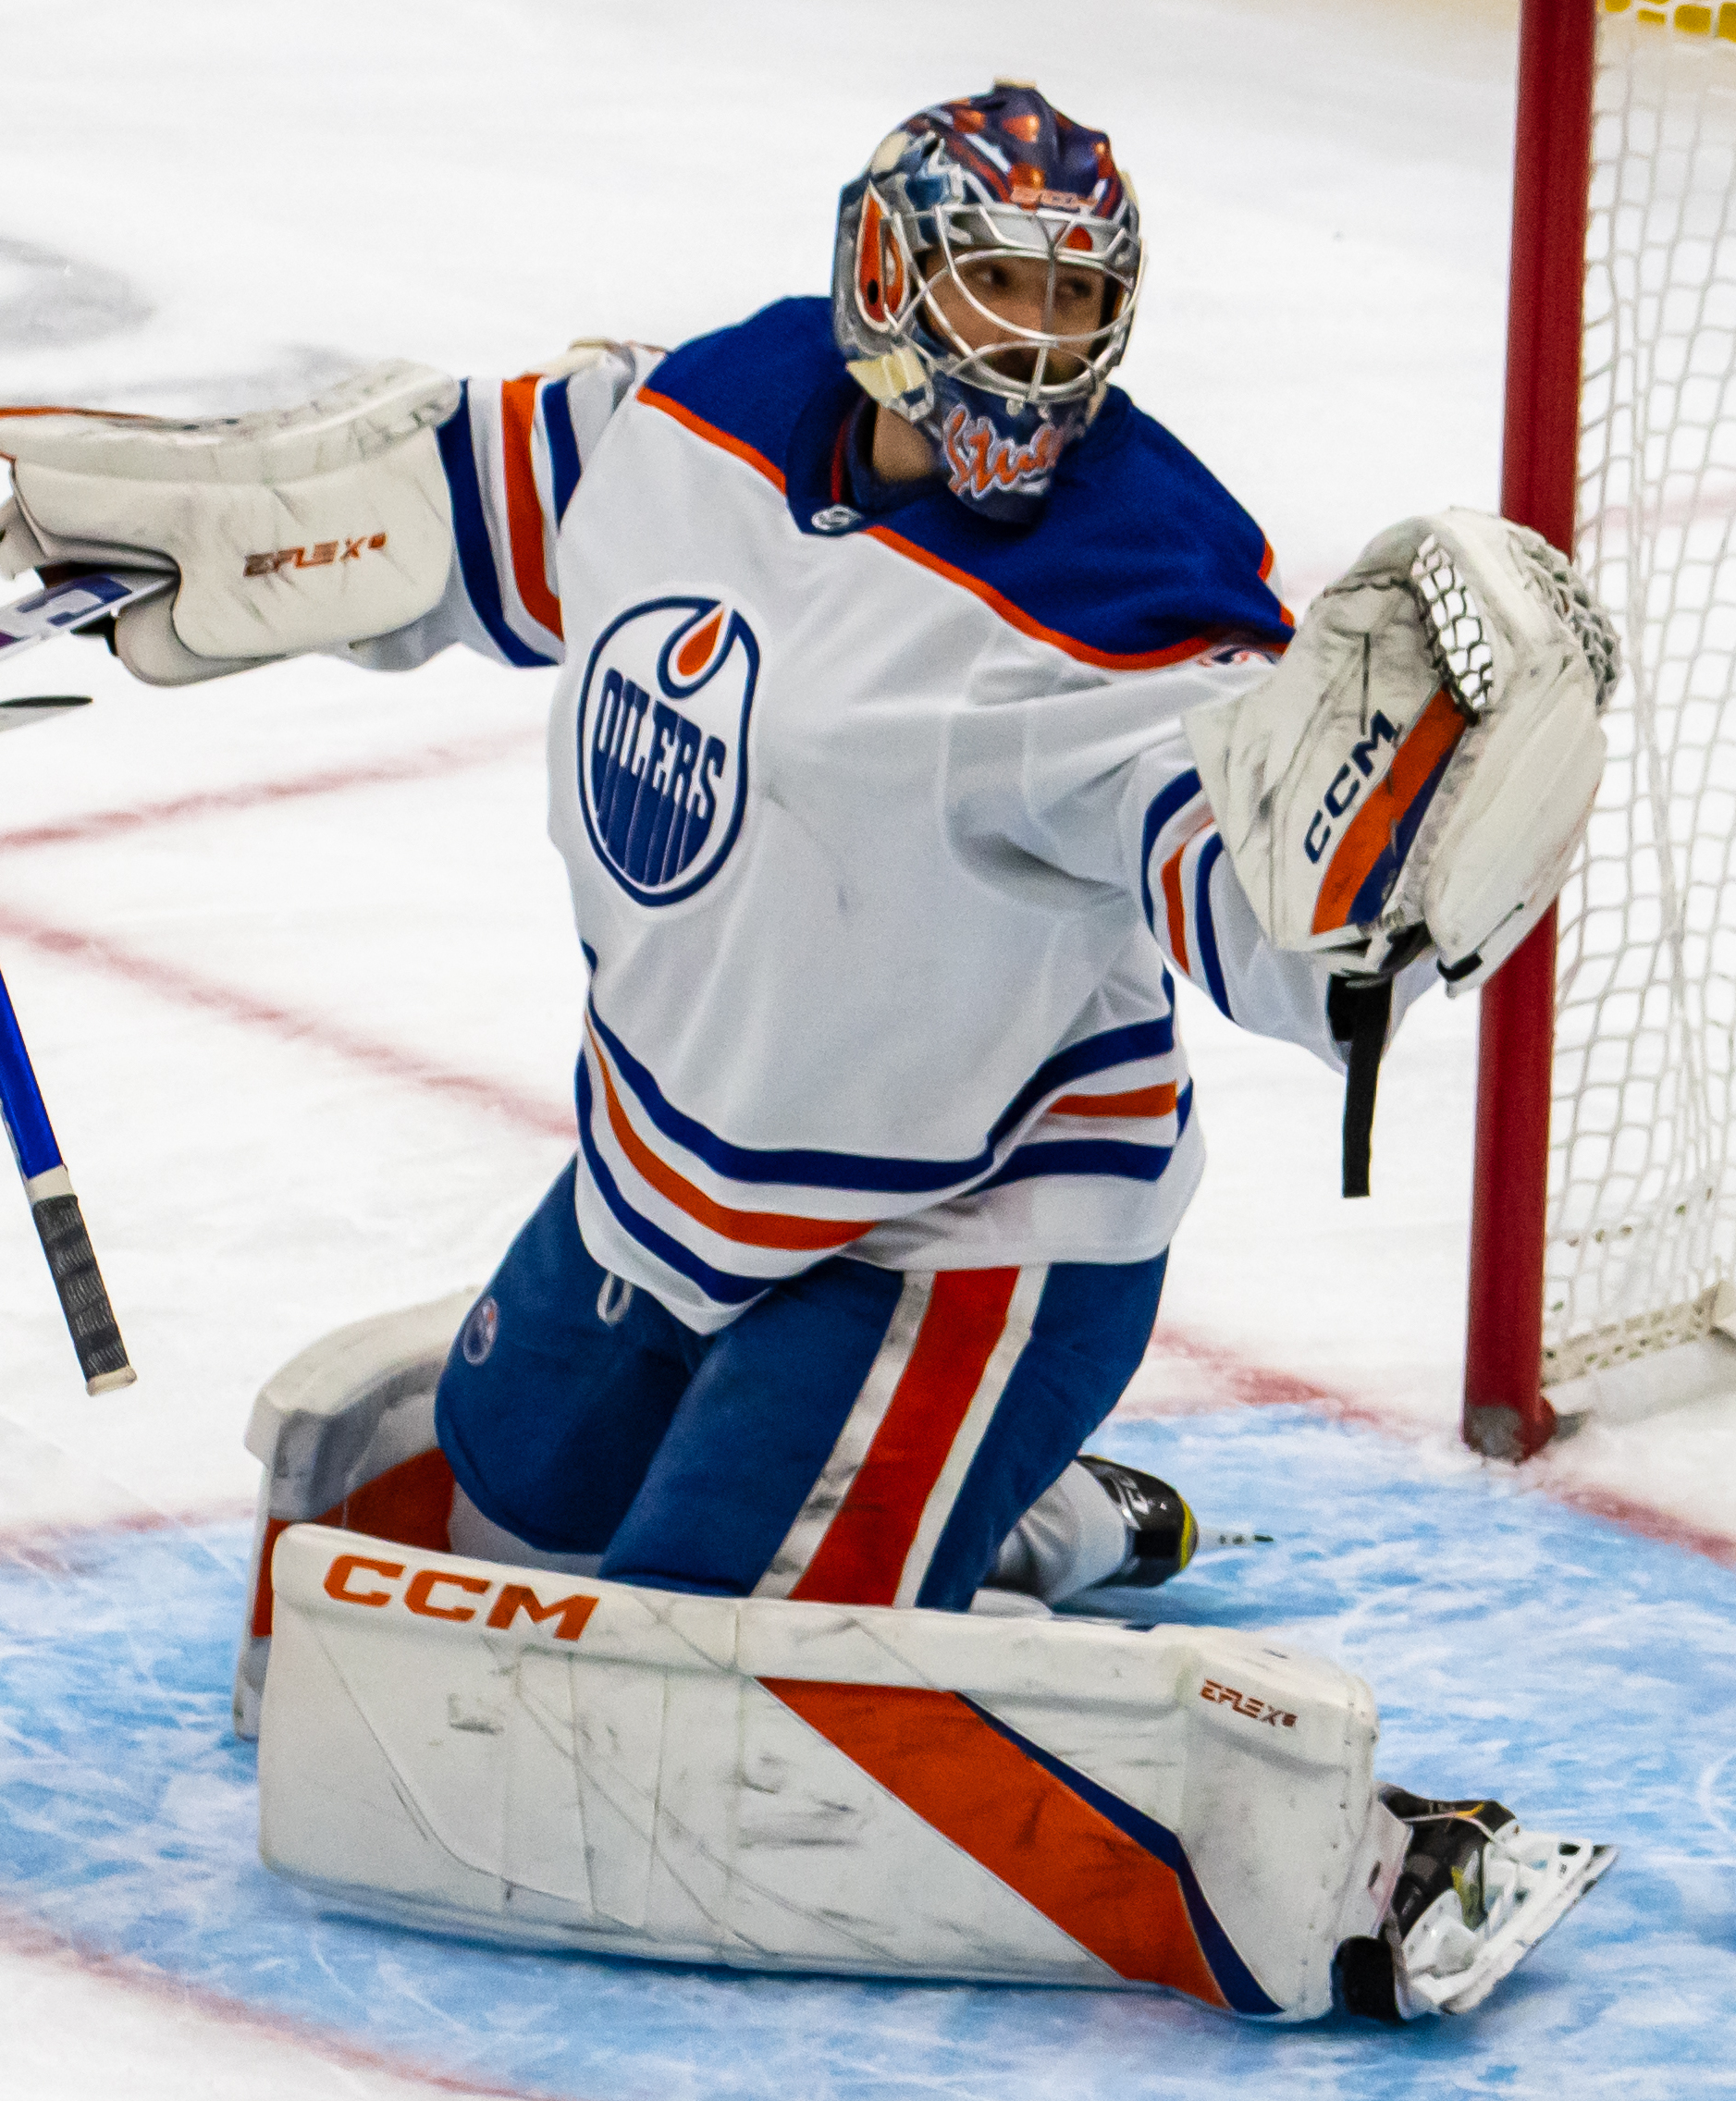 May 22, 2022, Edmonton, AB, CANADA: Edmonton Oilers goalie Mike